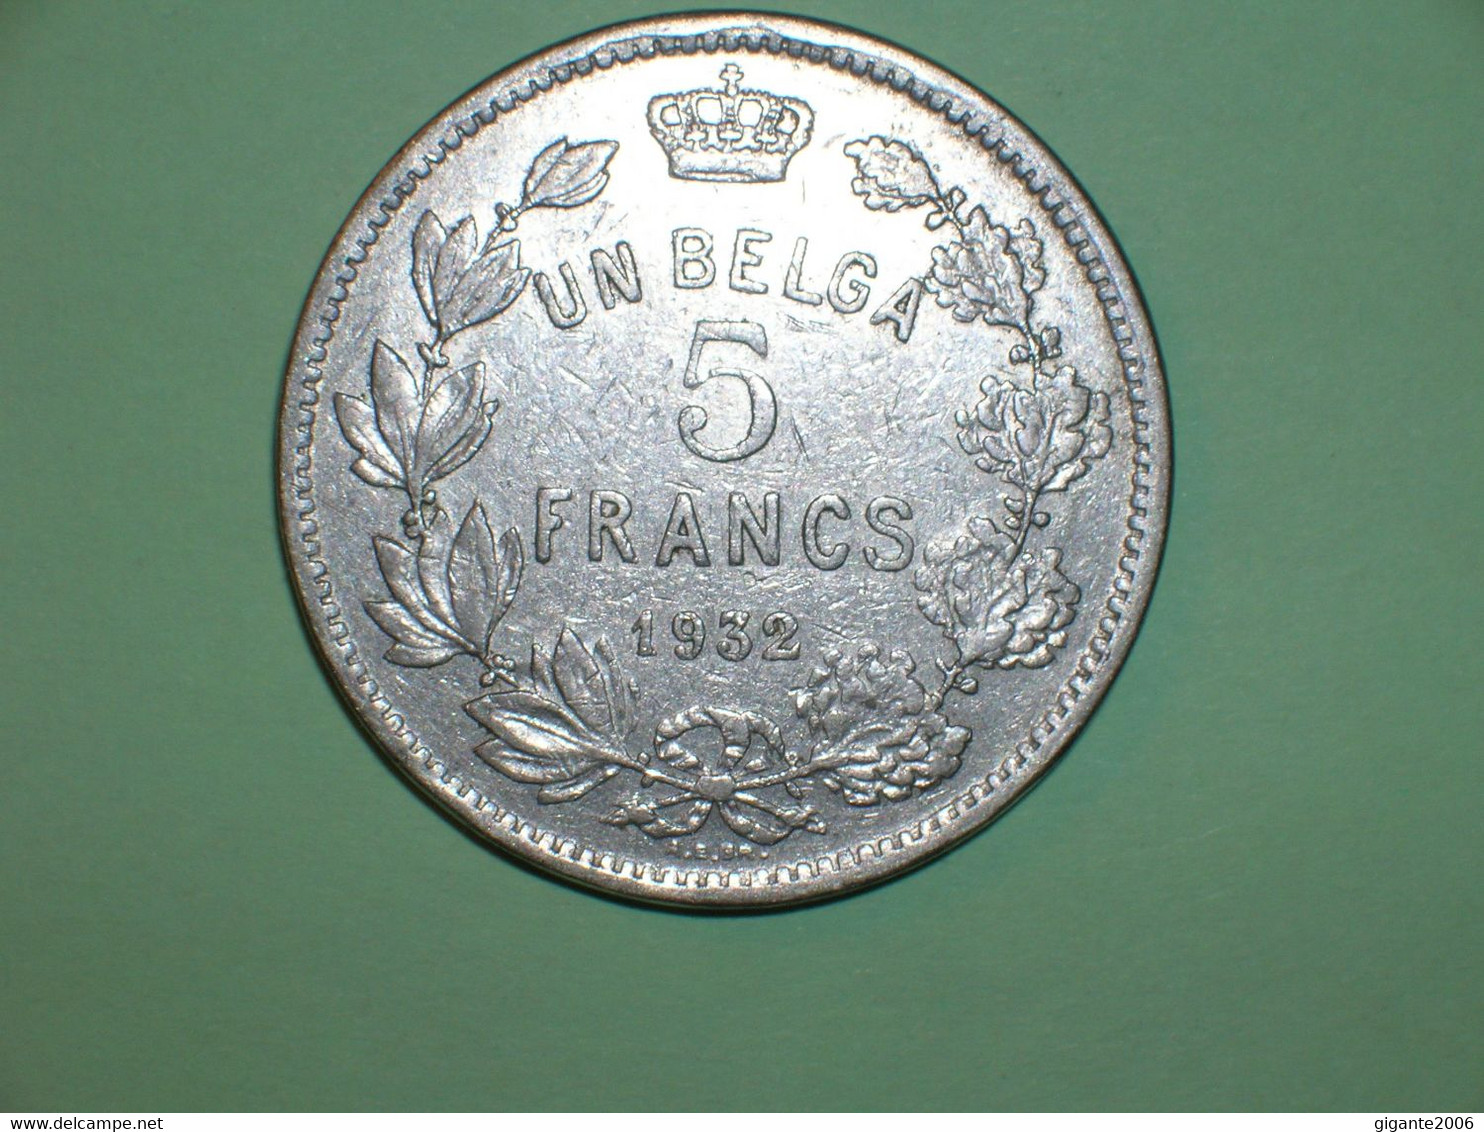 BELGICA 5 FRANCOS 1932 FR (3294) - 5 Francs & 1 Belga